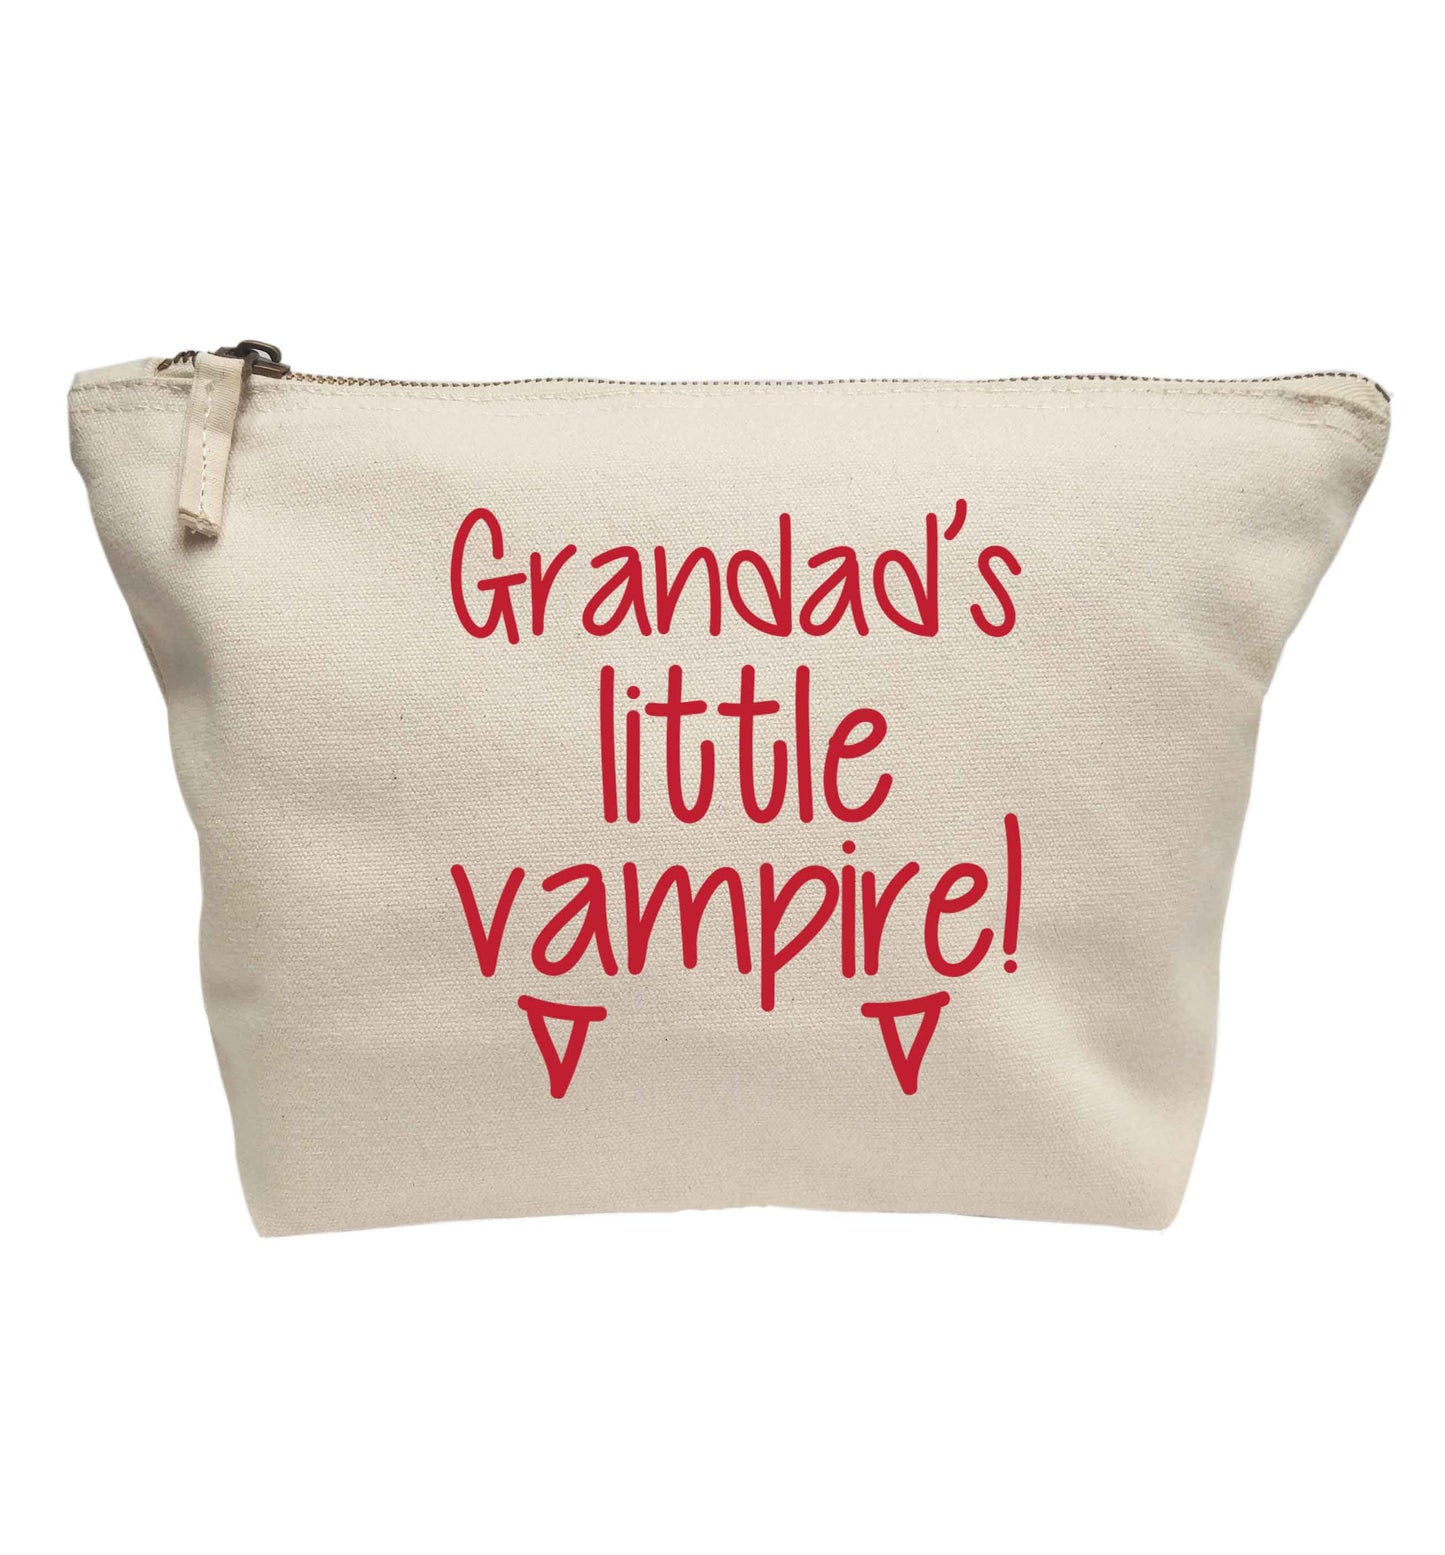 Grandad's little vampire | Makeup / wash bag